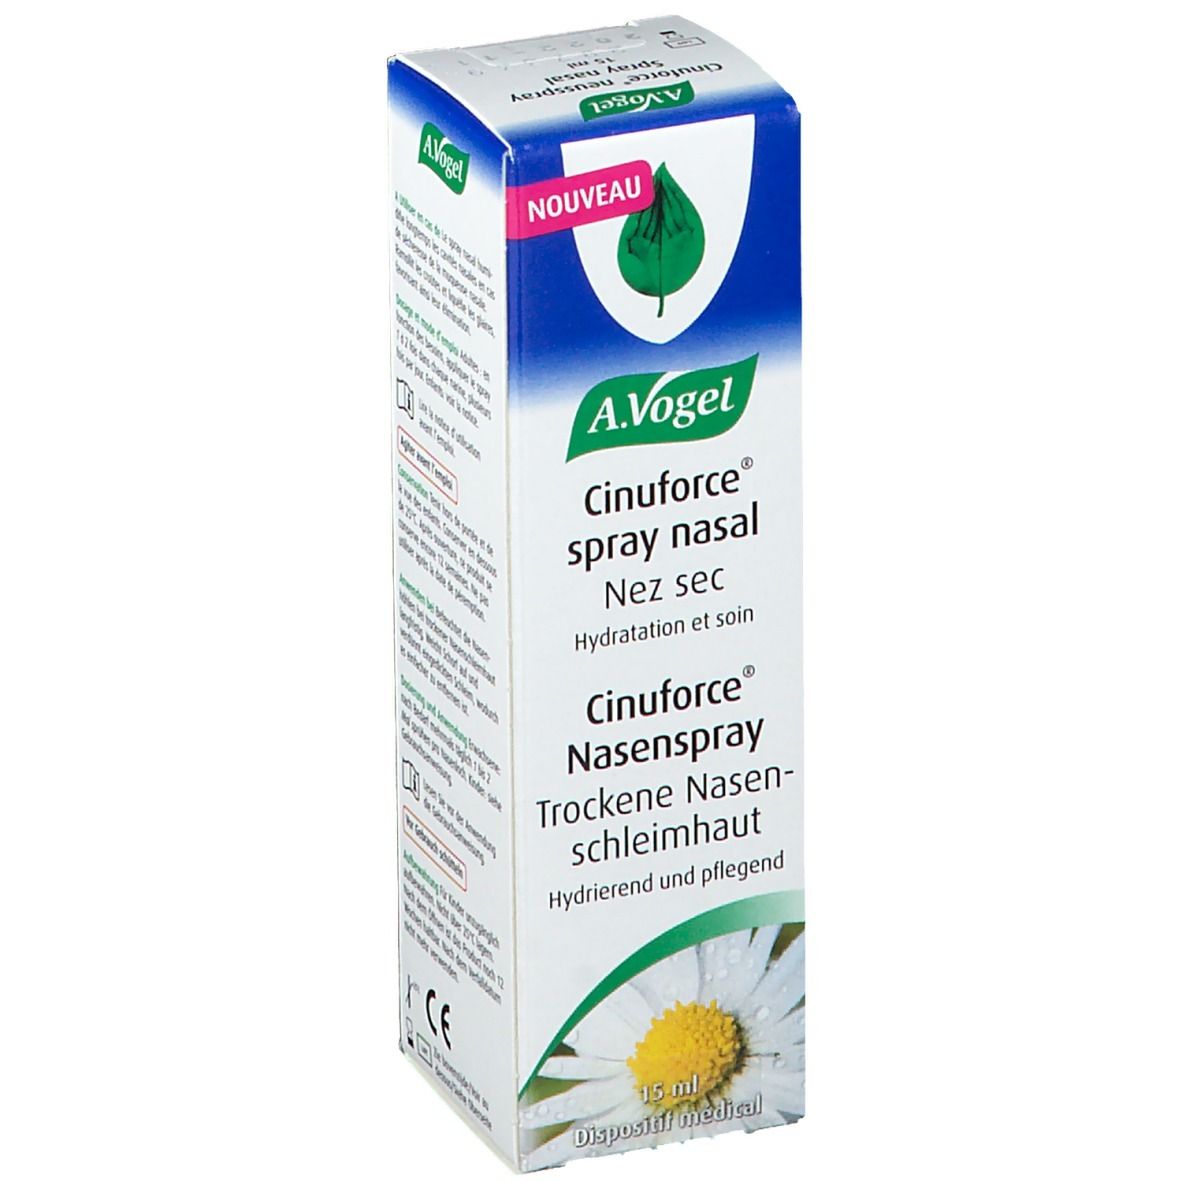 A. Vogel Cinuforce® nasal spray